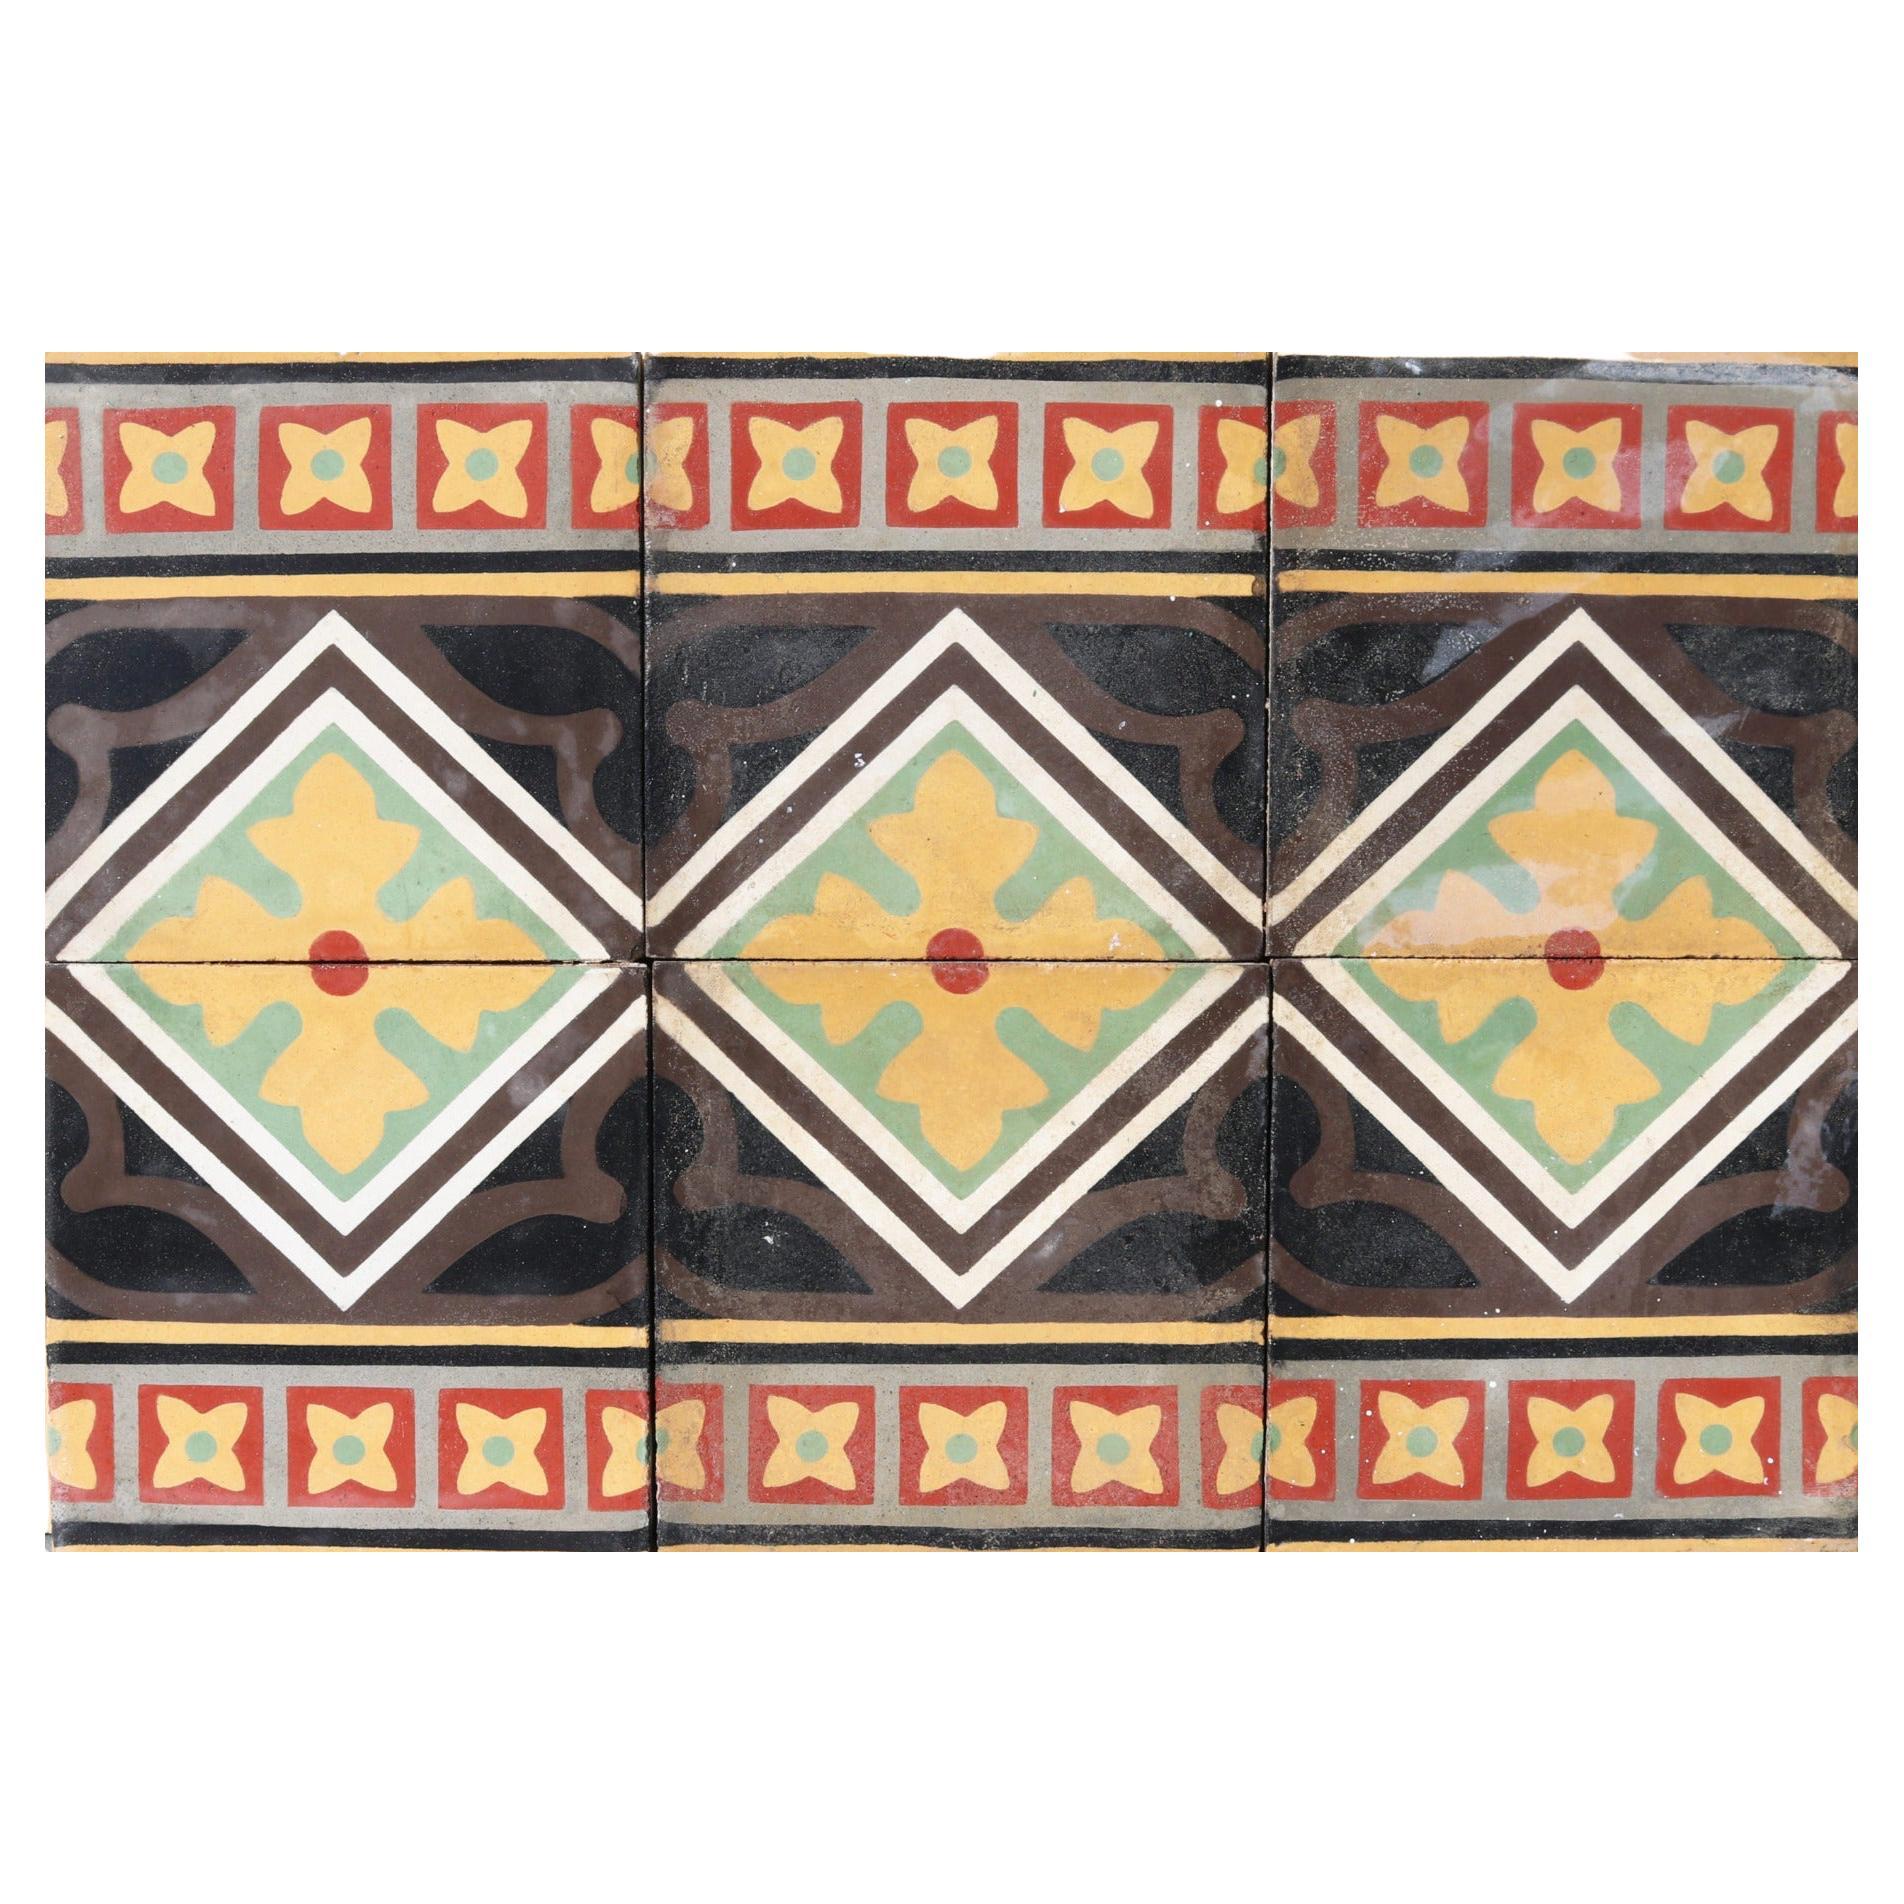 Reclaimed Tiles For Sale